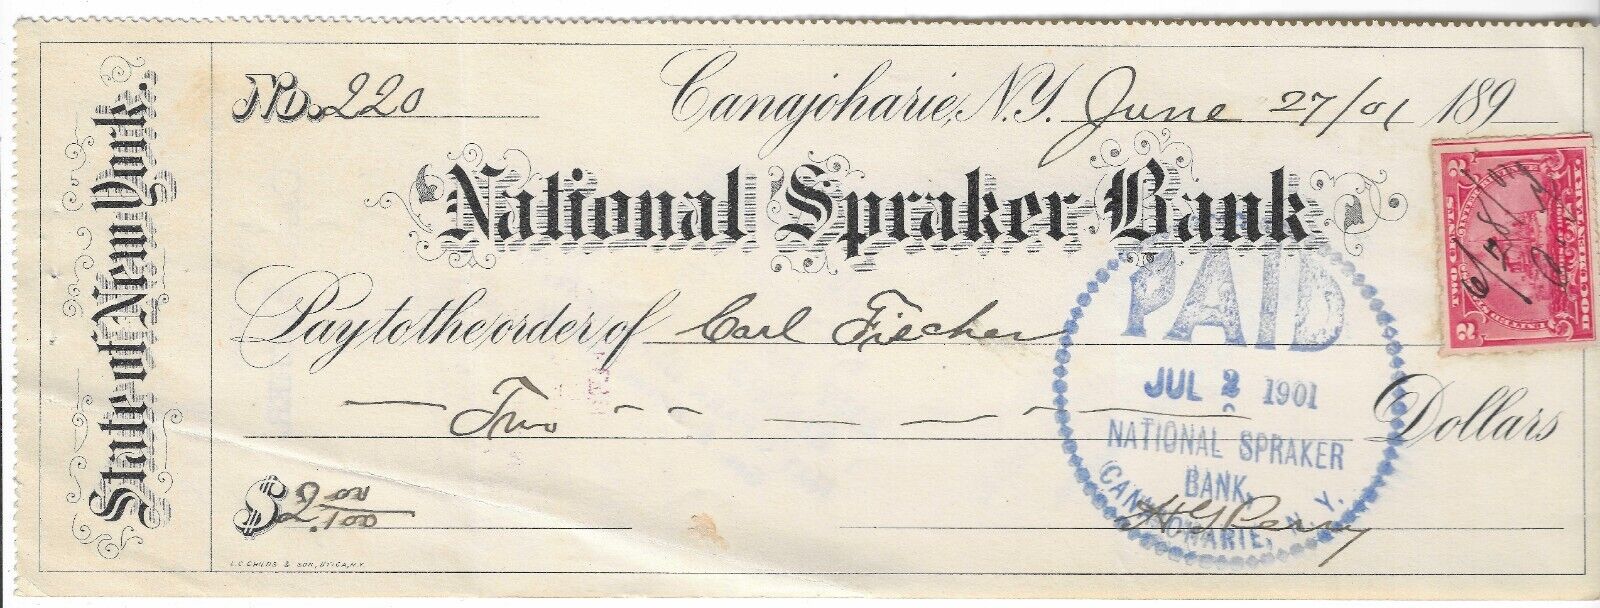 1901 Check, National Spraker Bank, Canajoharie, New York, Carl Fiecher